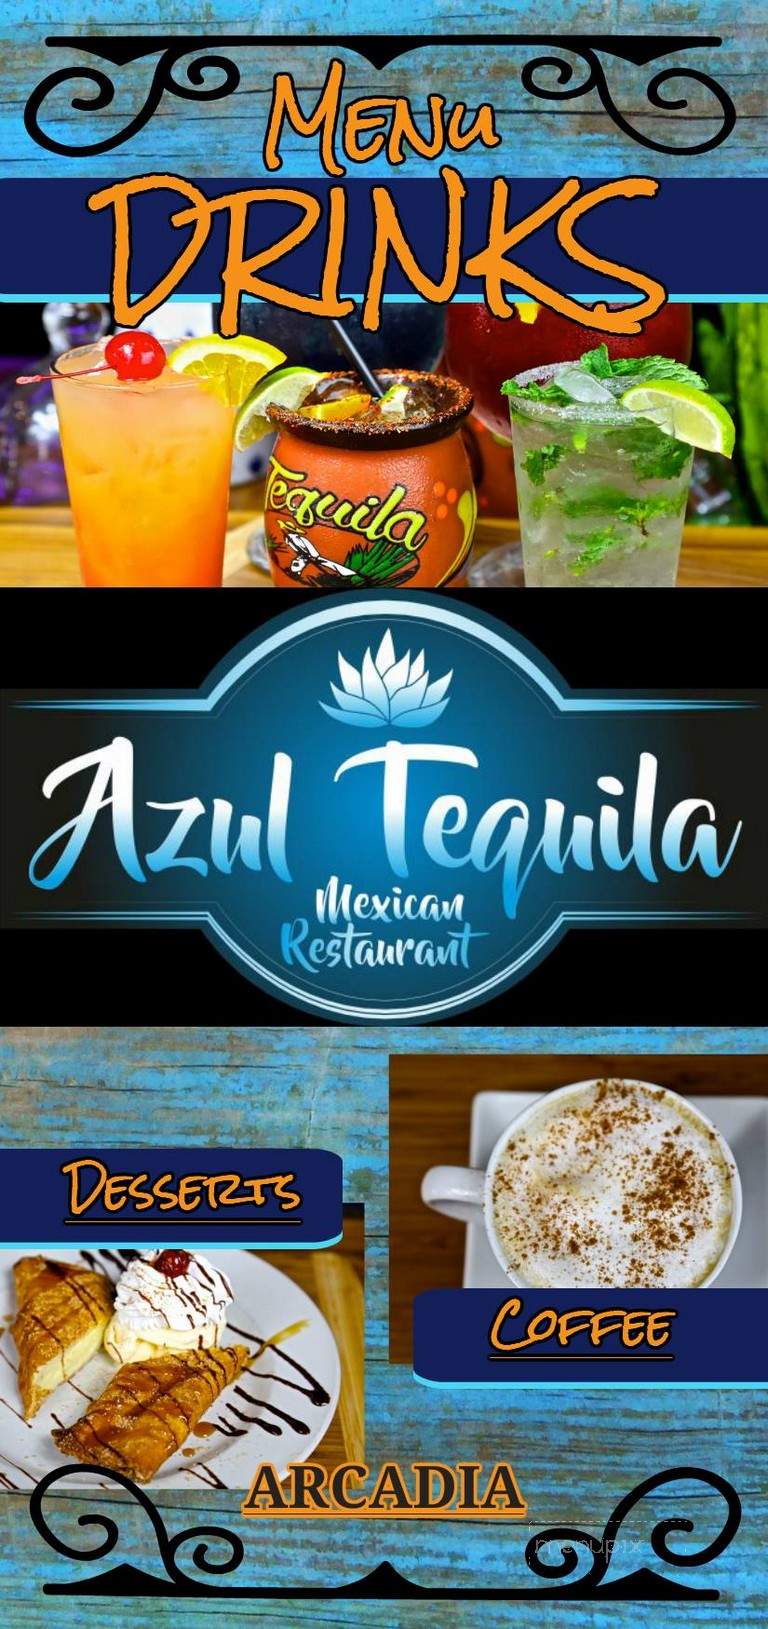 Azul Tequila - Arcadia, FL